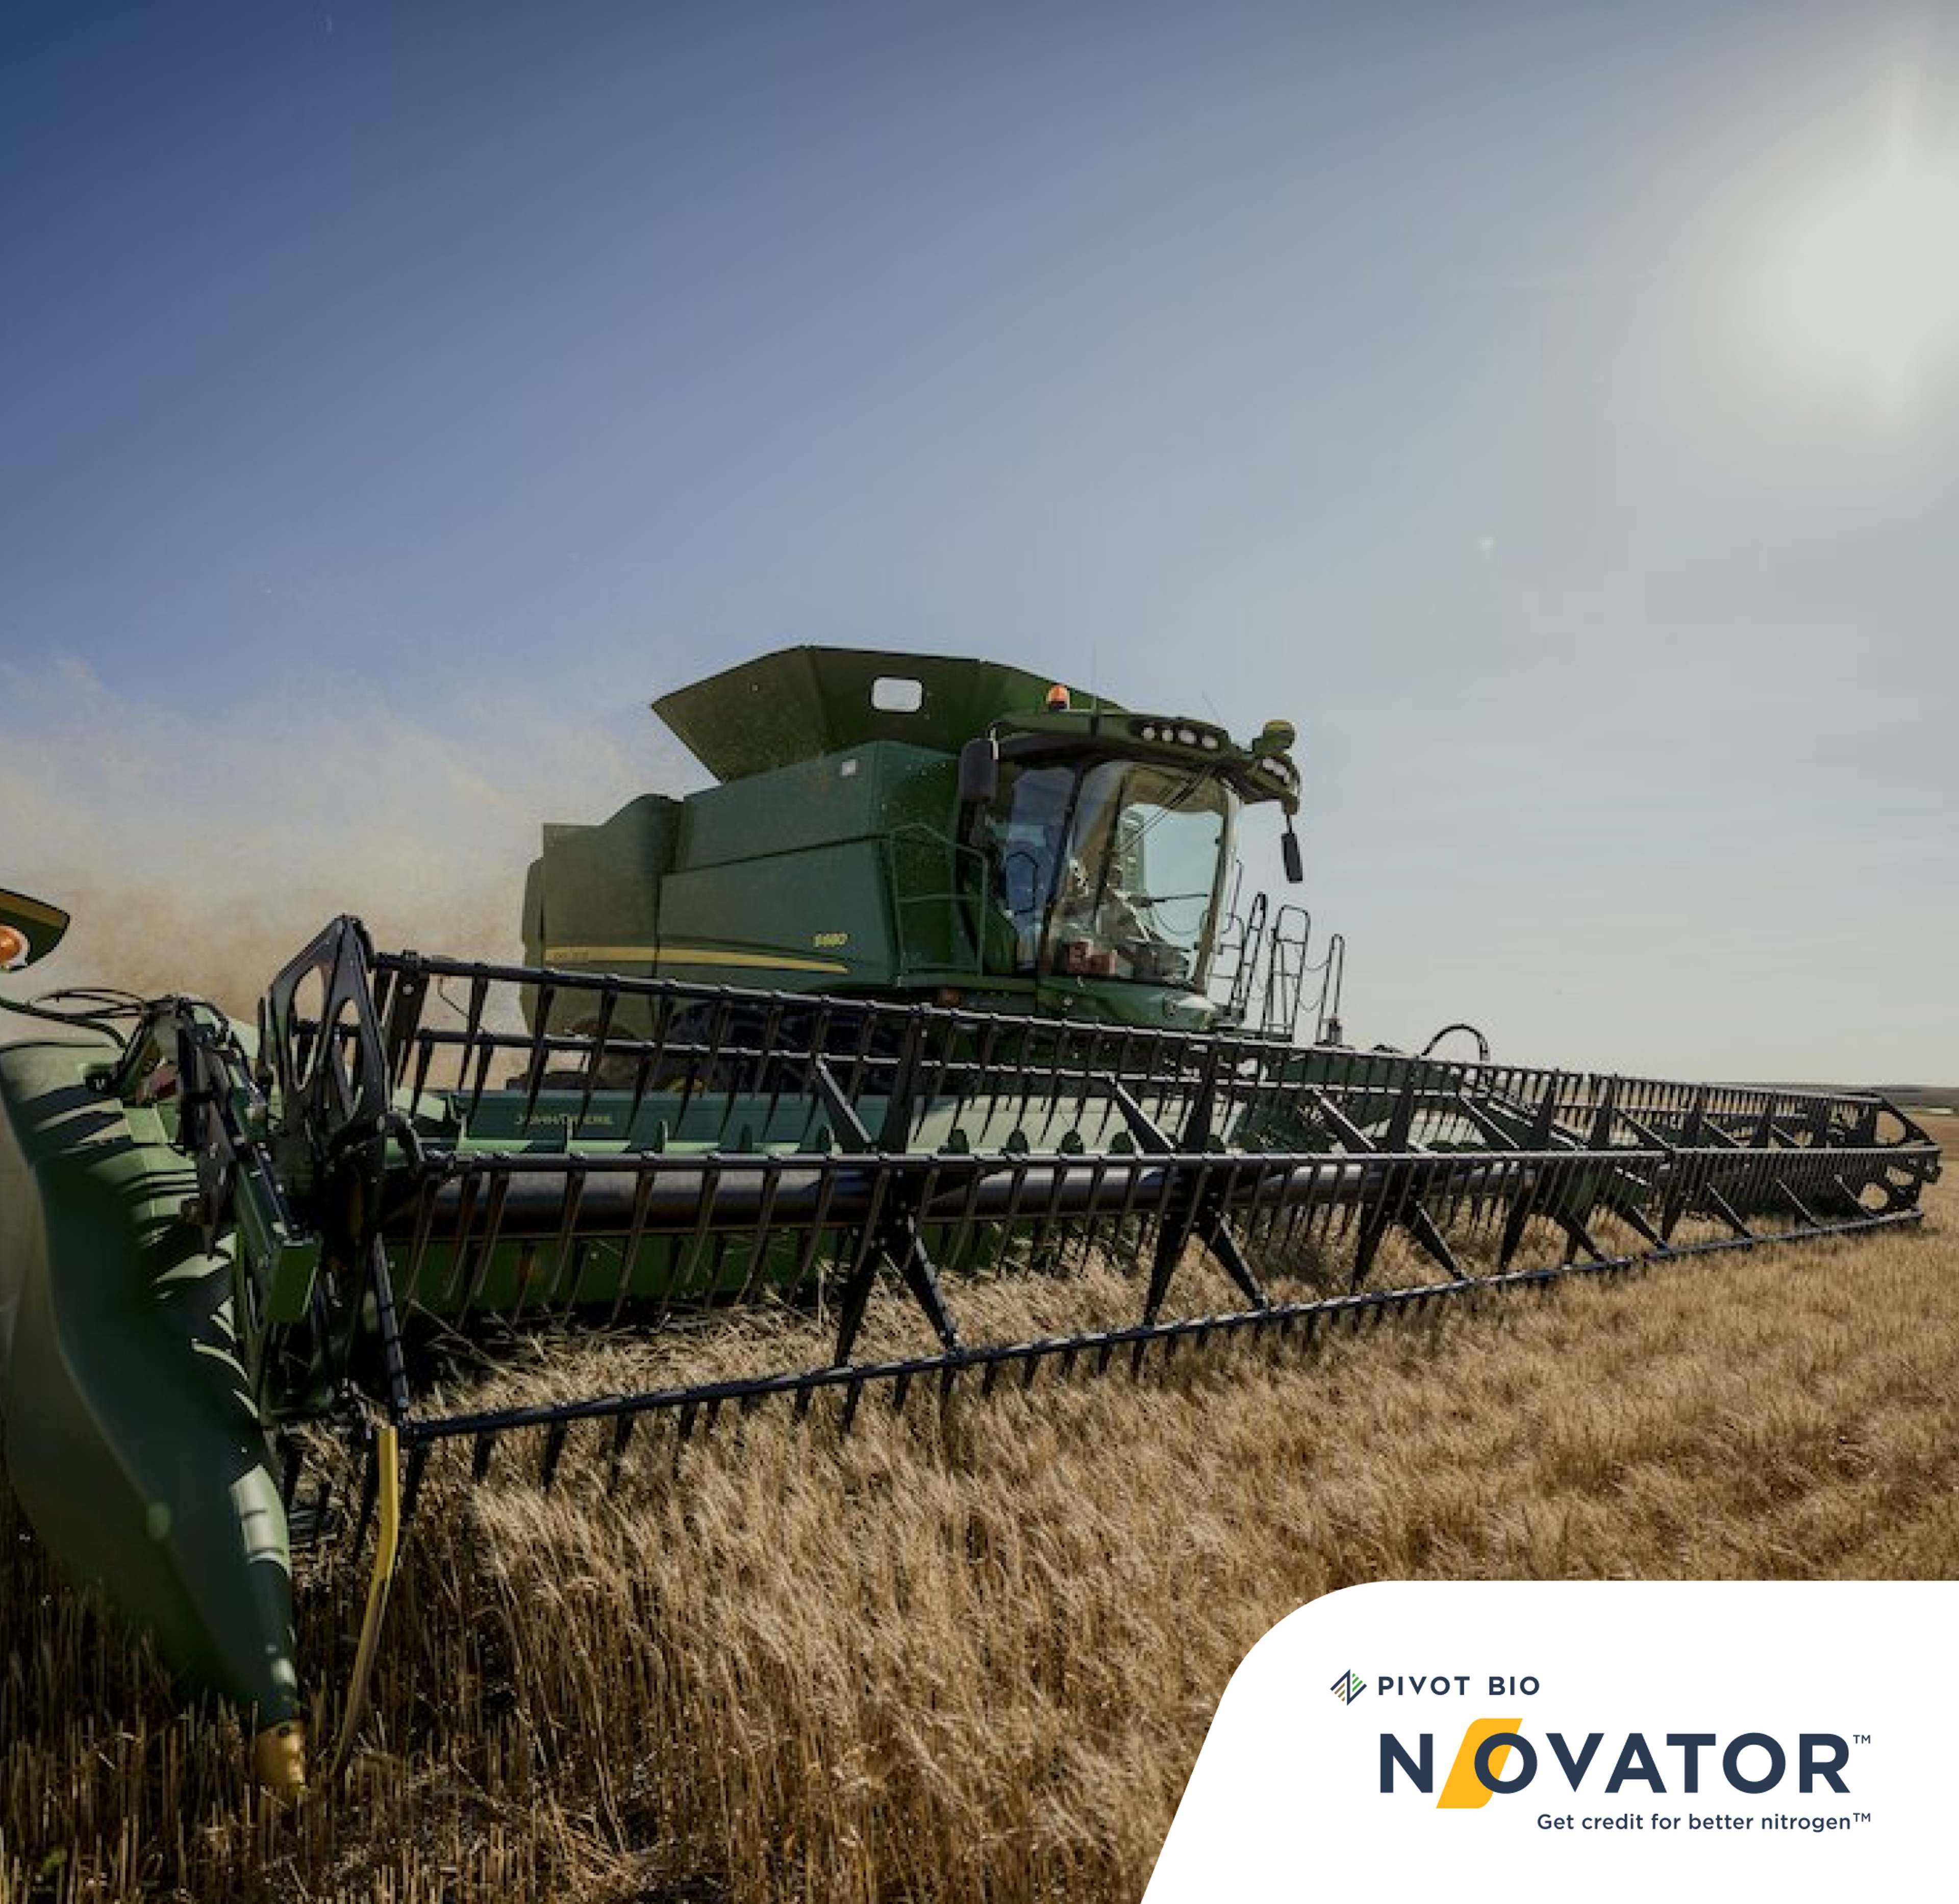 Combine harvesting wheat with the Pivot Bio Novator logo in the corner